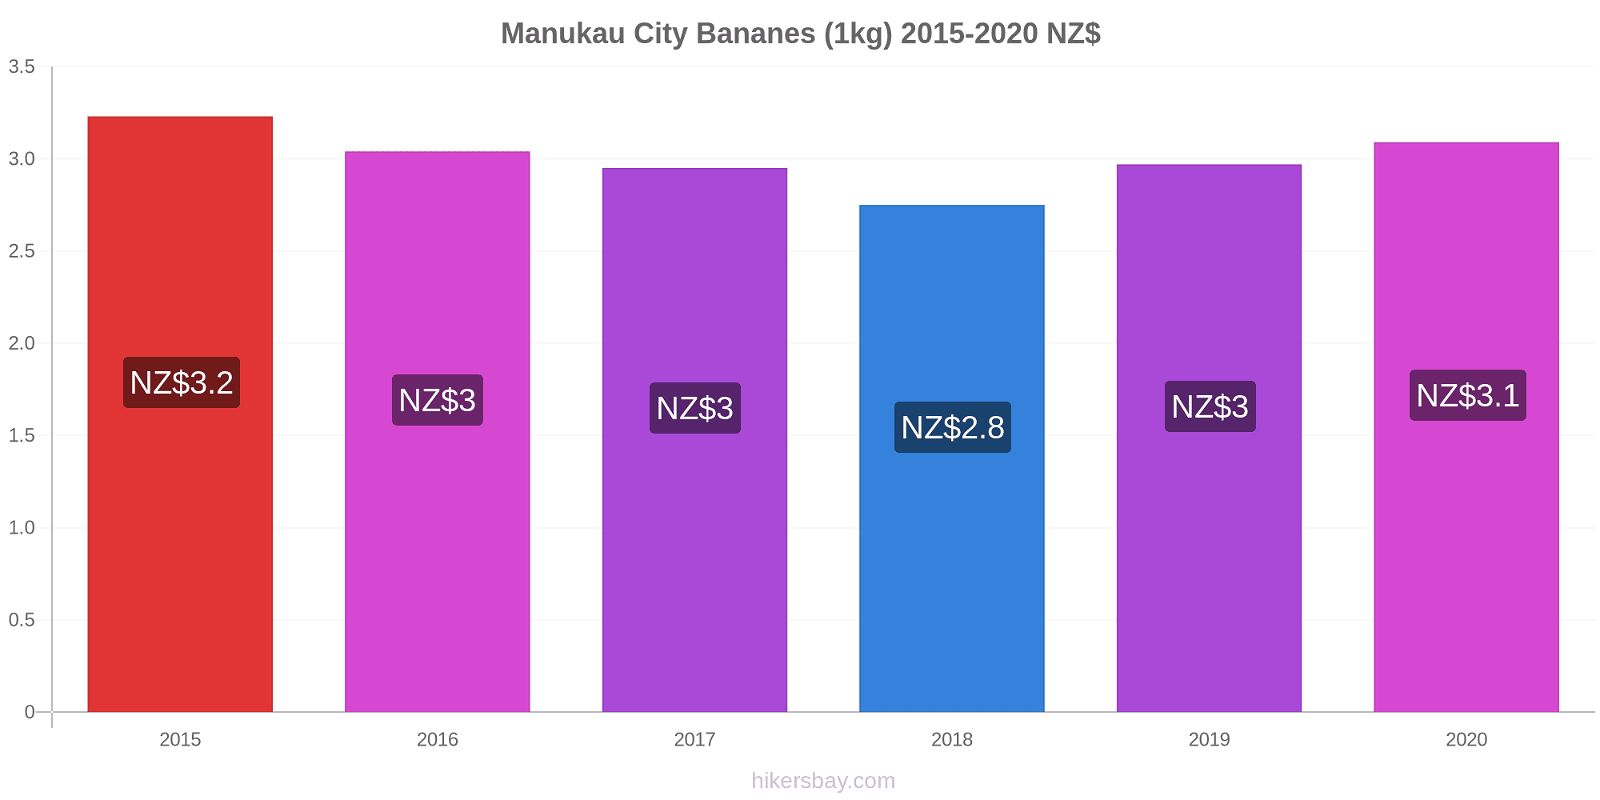 Manukau City changements de prix Bananes (1kg) hikersbay.com